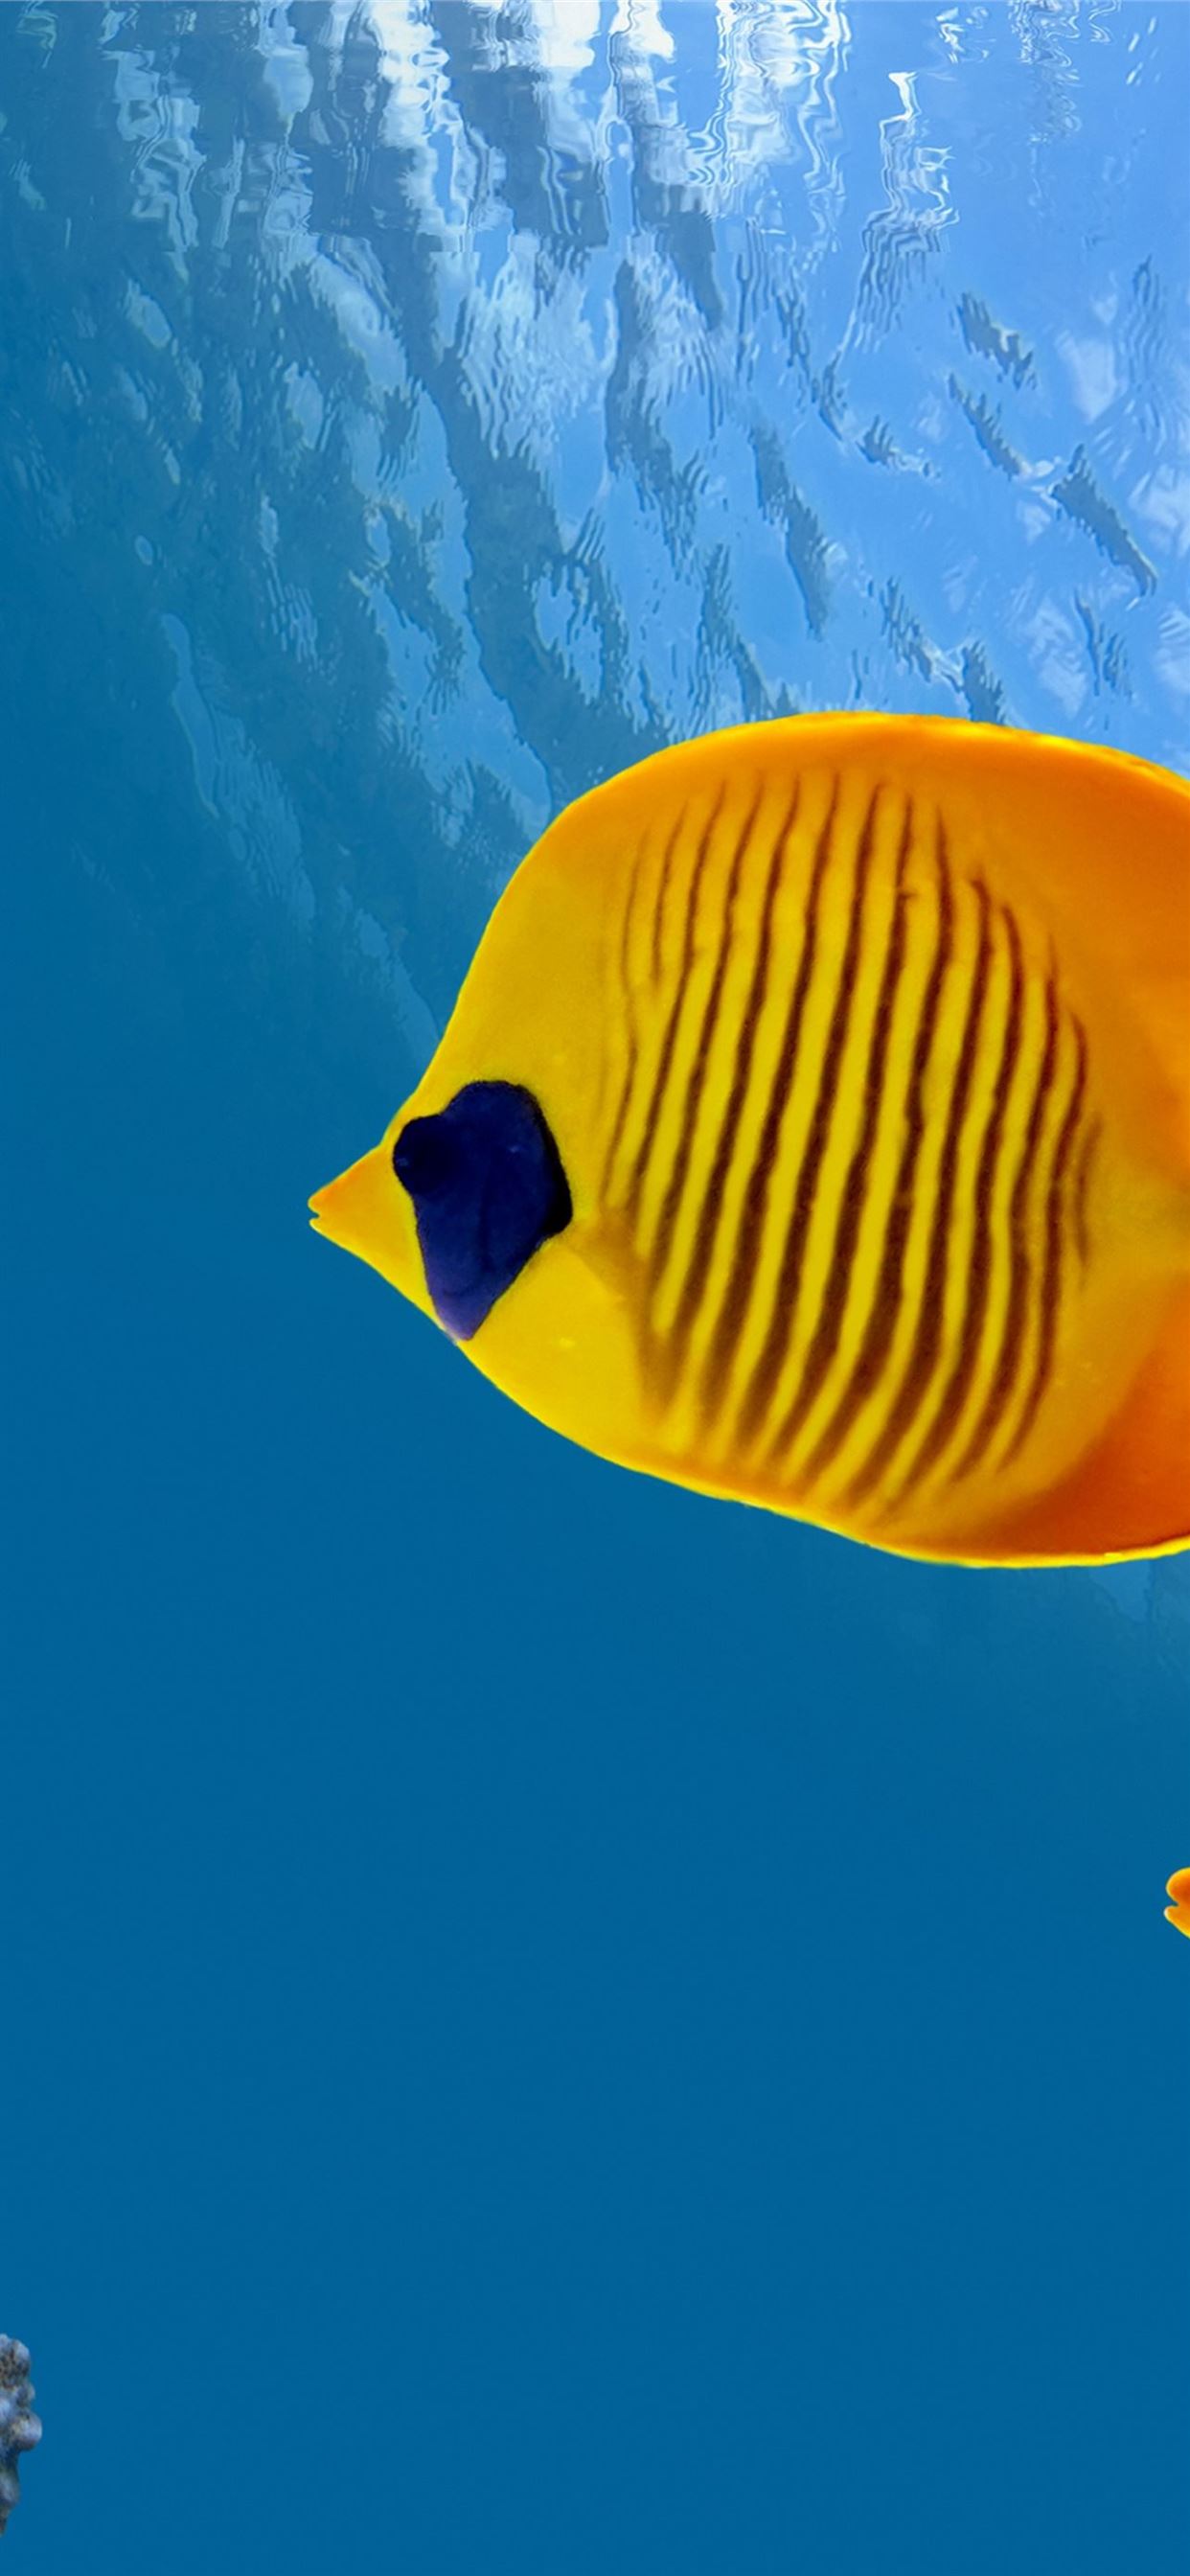 Fish 5k 4k 8k diving tourism Cocos Island Costa Ri. iPhone Wallpaper Free Download